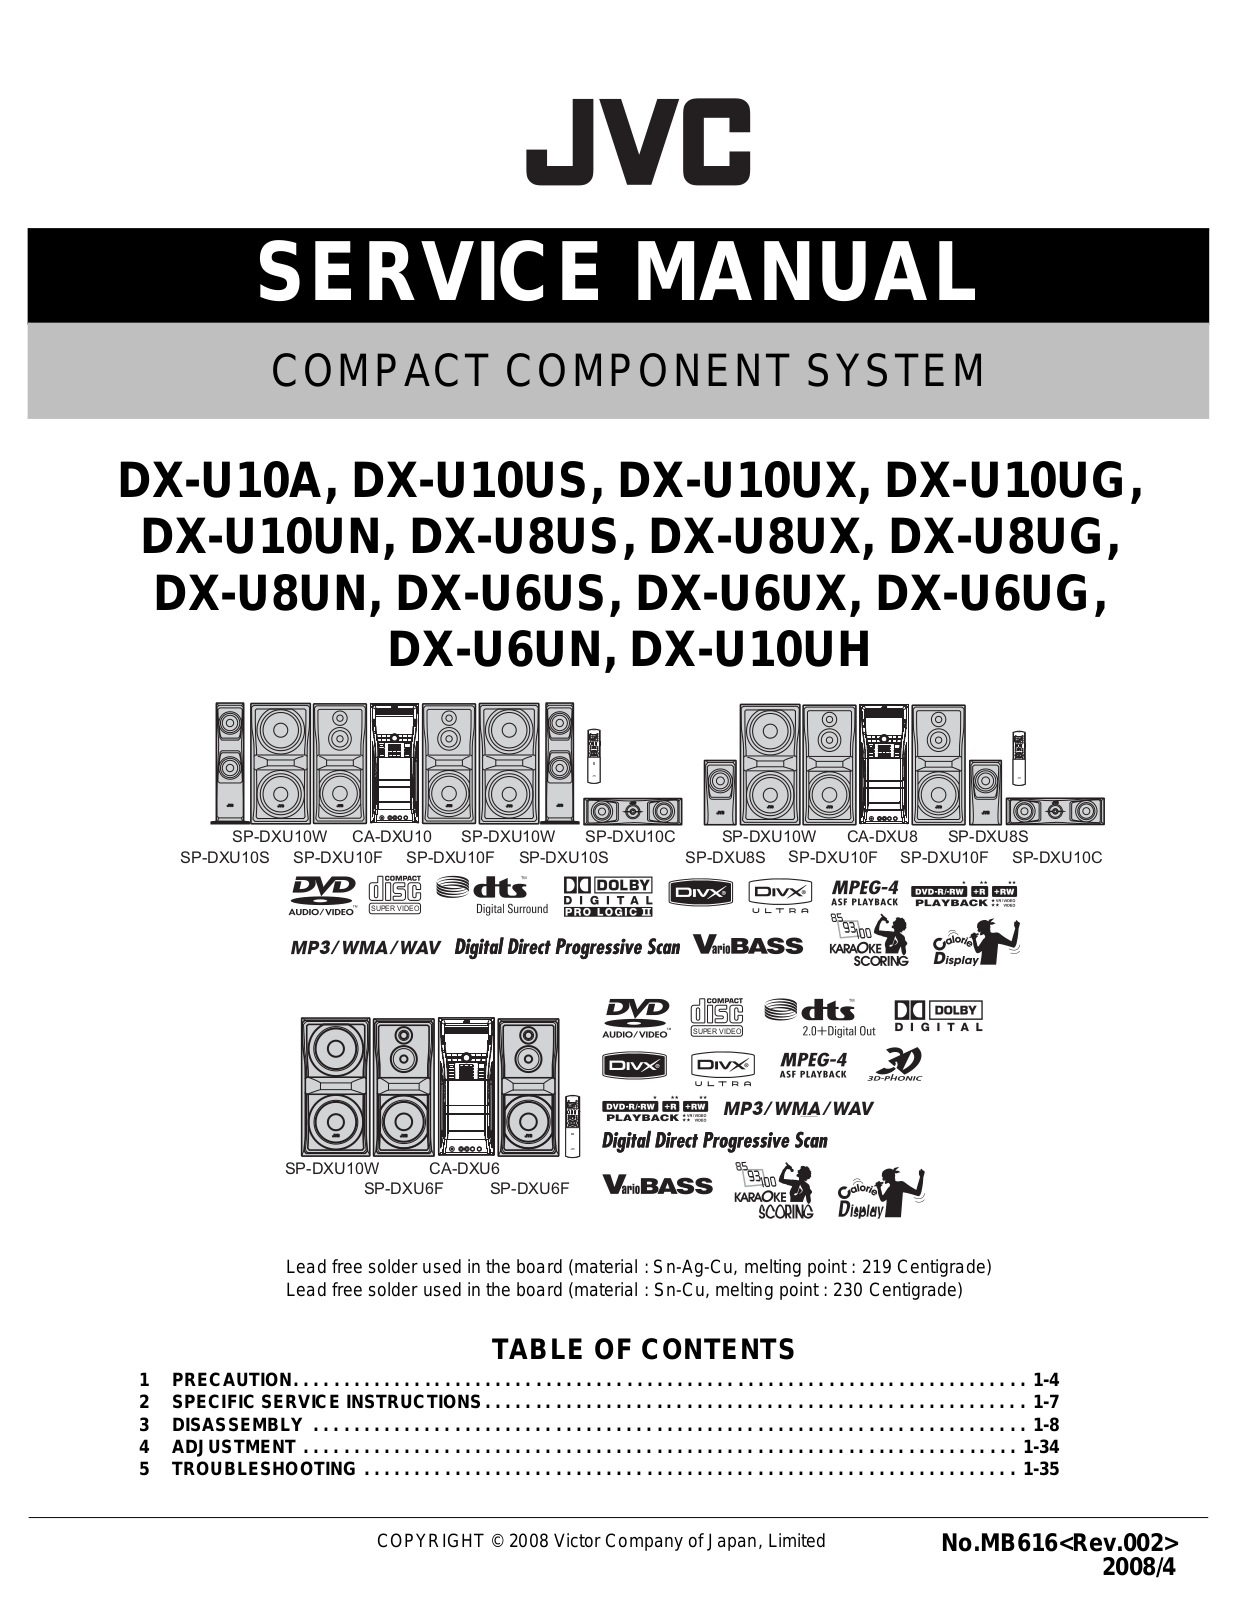 JVC DXU-10, DXU-6, DXU-8 Service manual